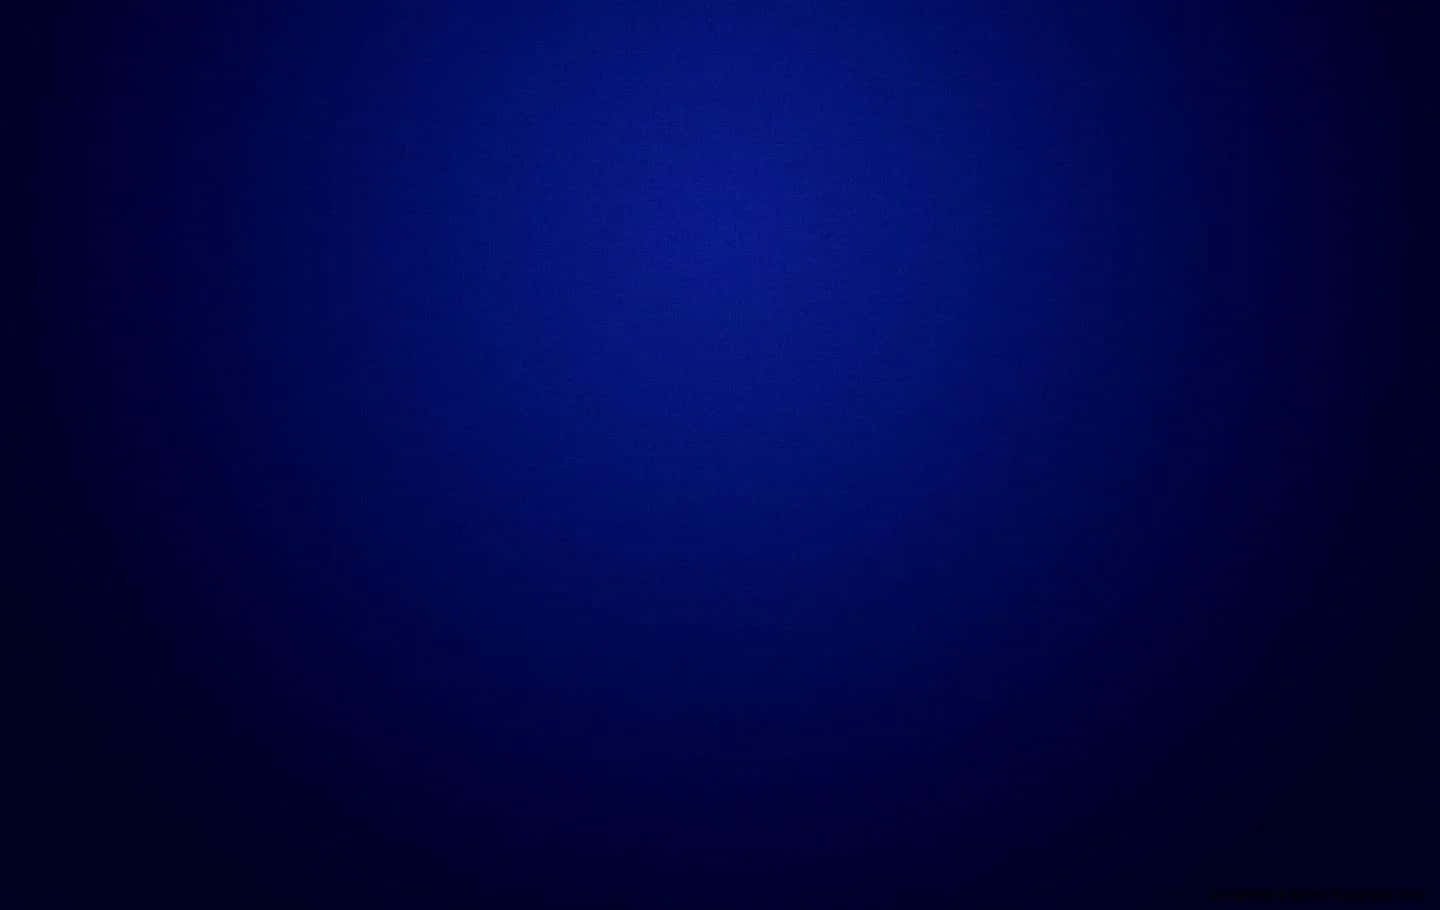 200+] Navy Blue Backgrounds